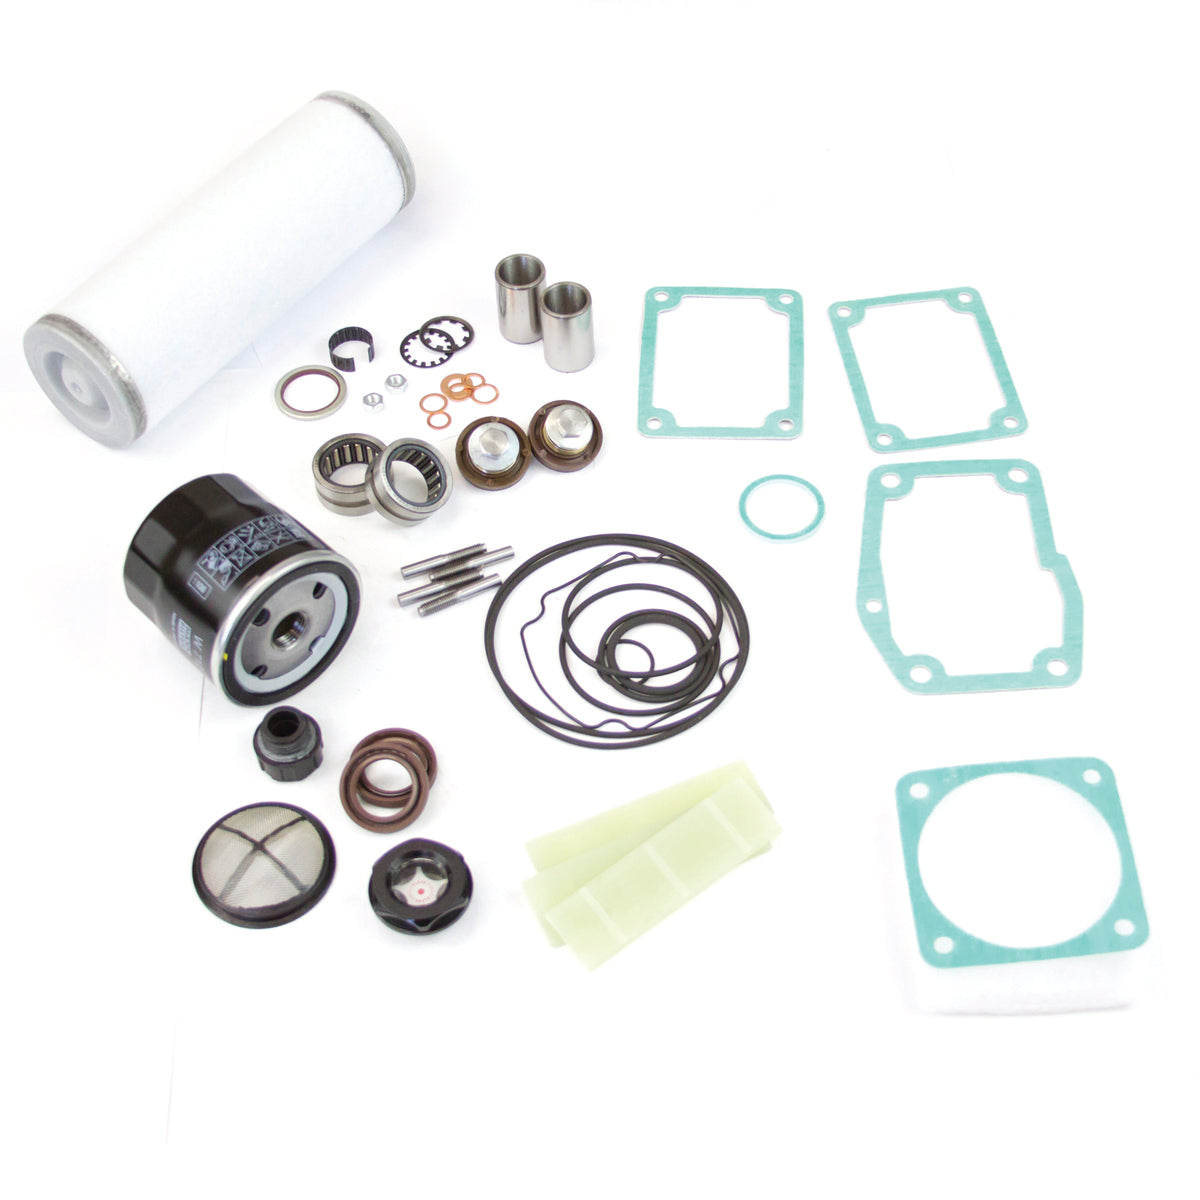 Major Repair Kit with GX Vanes & Filters - Busch 0040C / 0040E, BMKF008